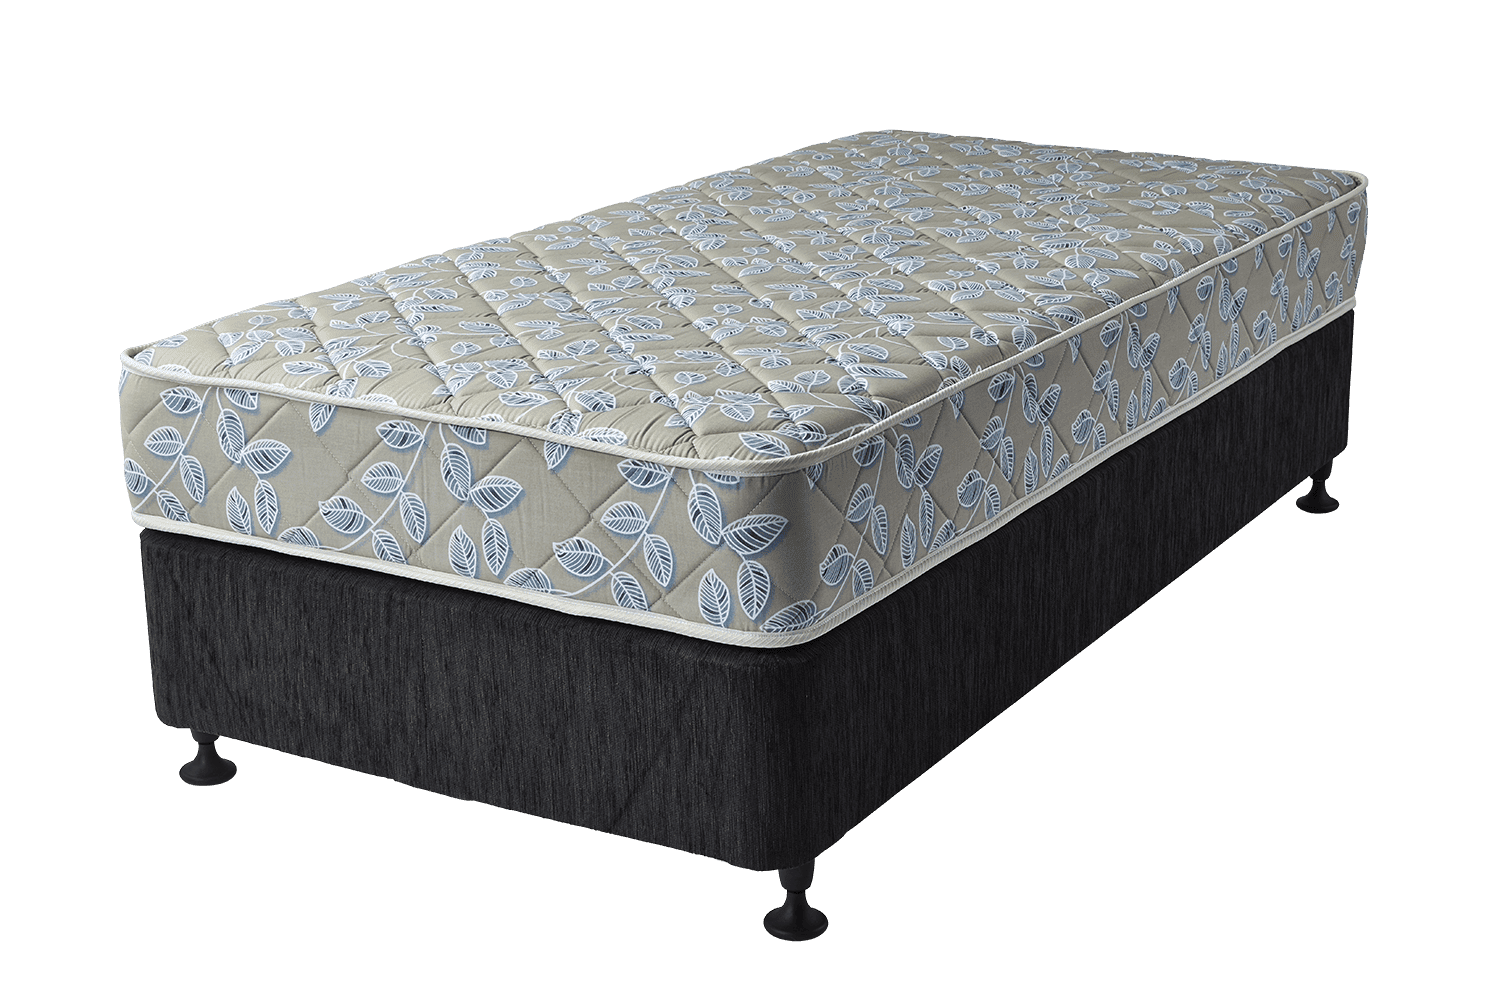 posture beauty sleep products mattress